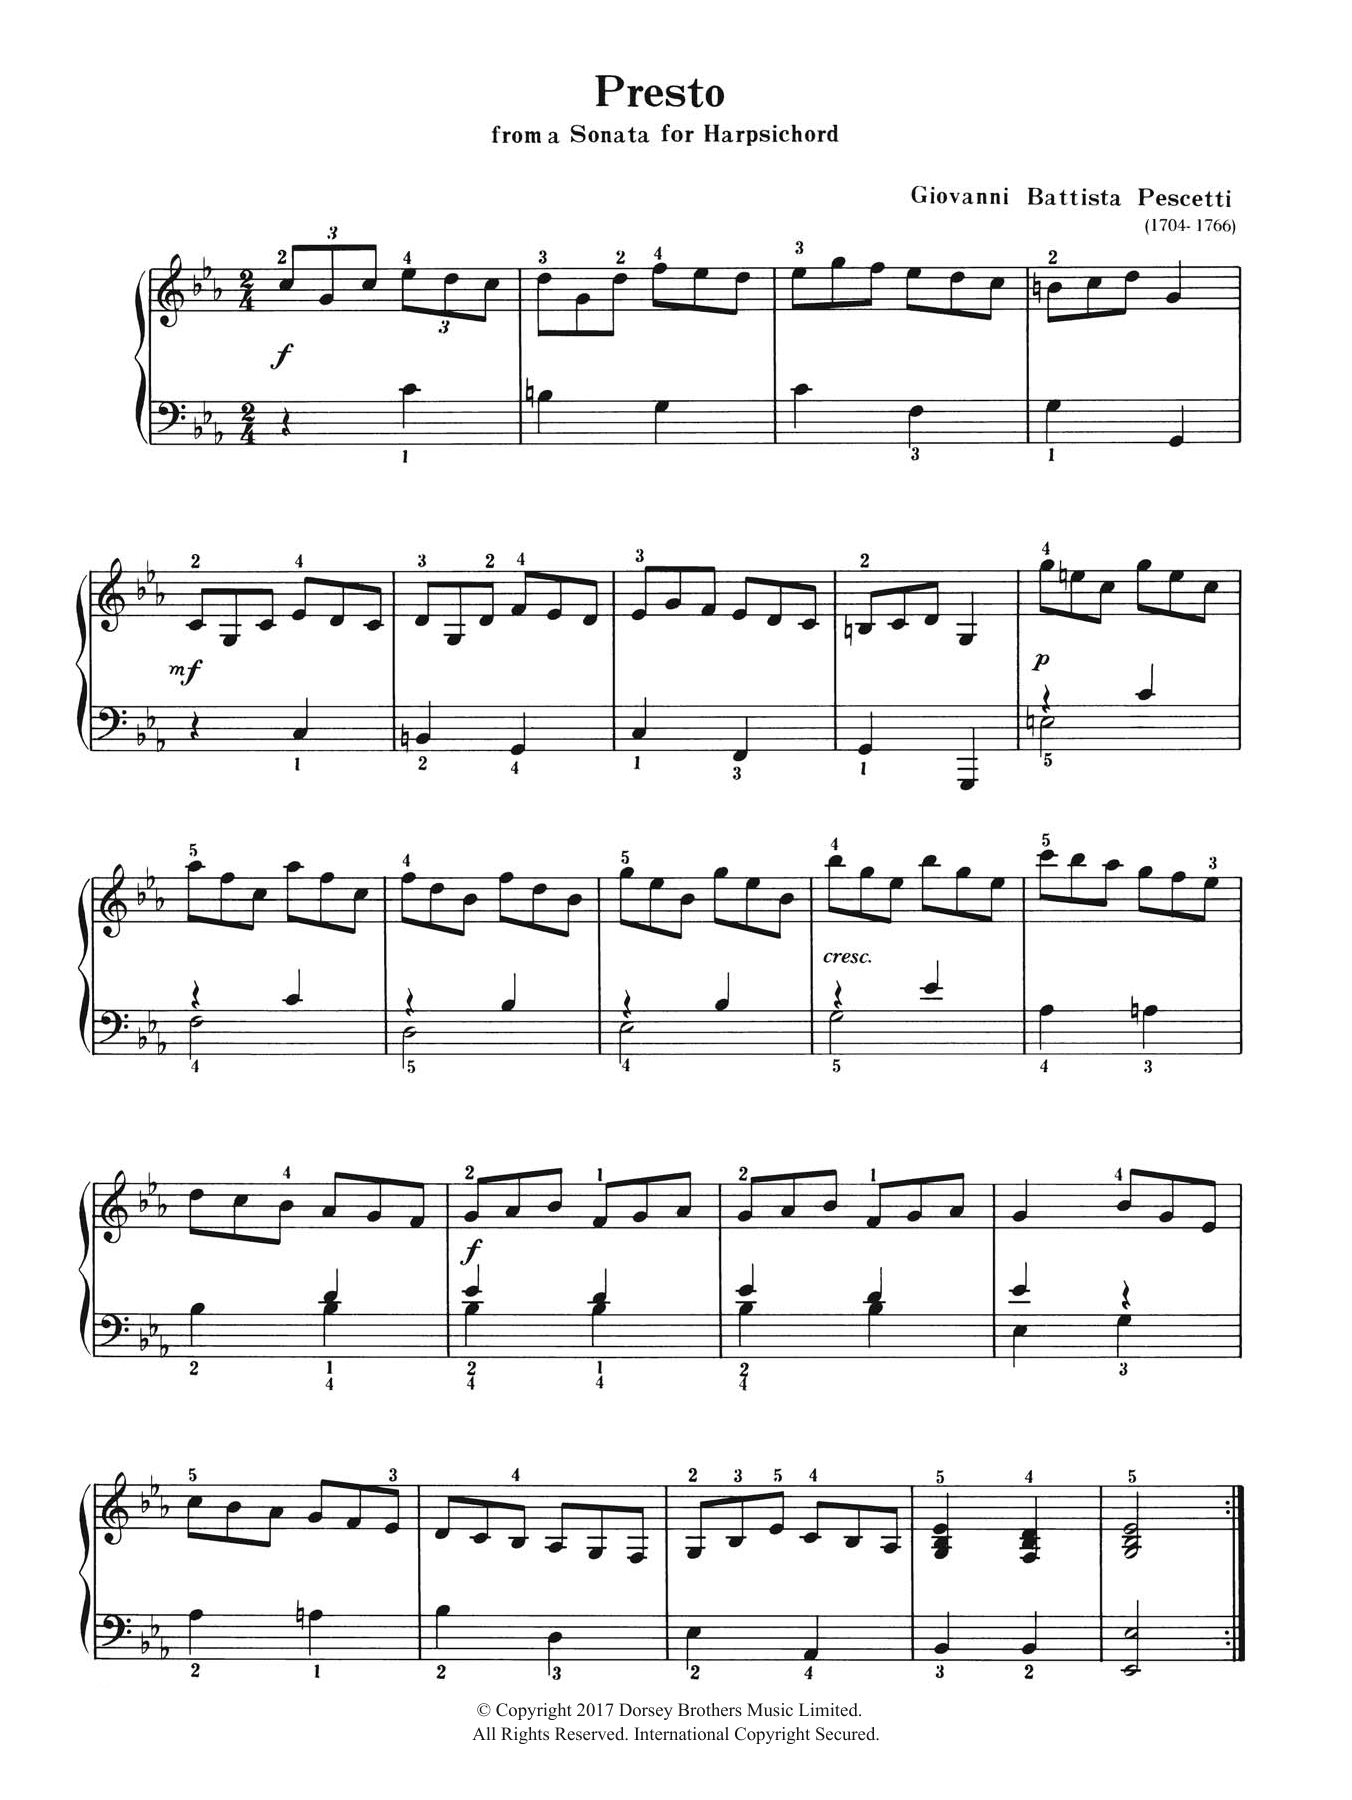 Giovanni Pescetti Presto Sheet Music Notes & Chords for Piano - Download or Print PDF